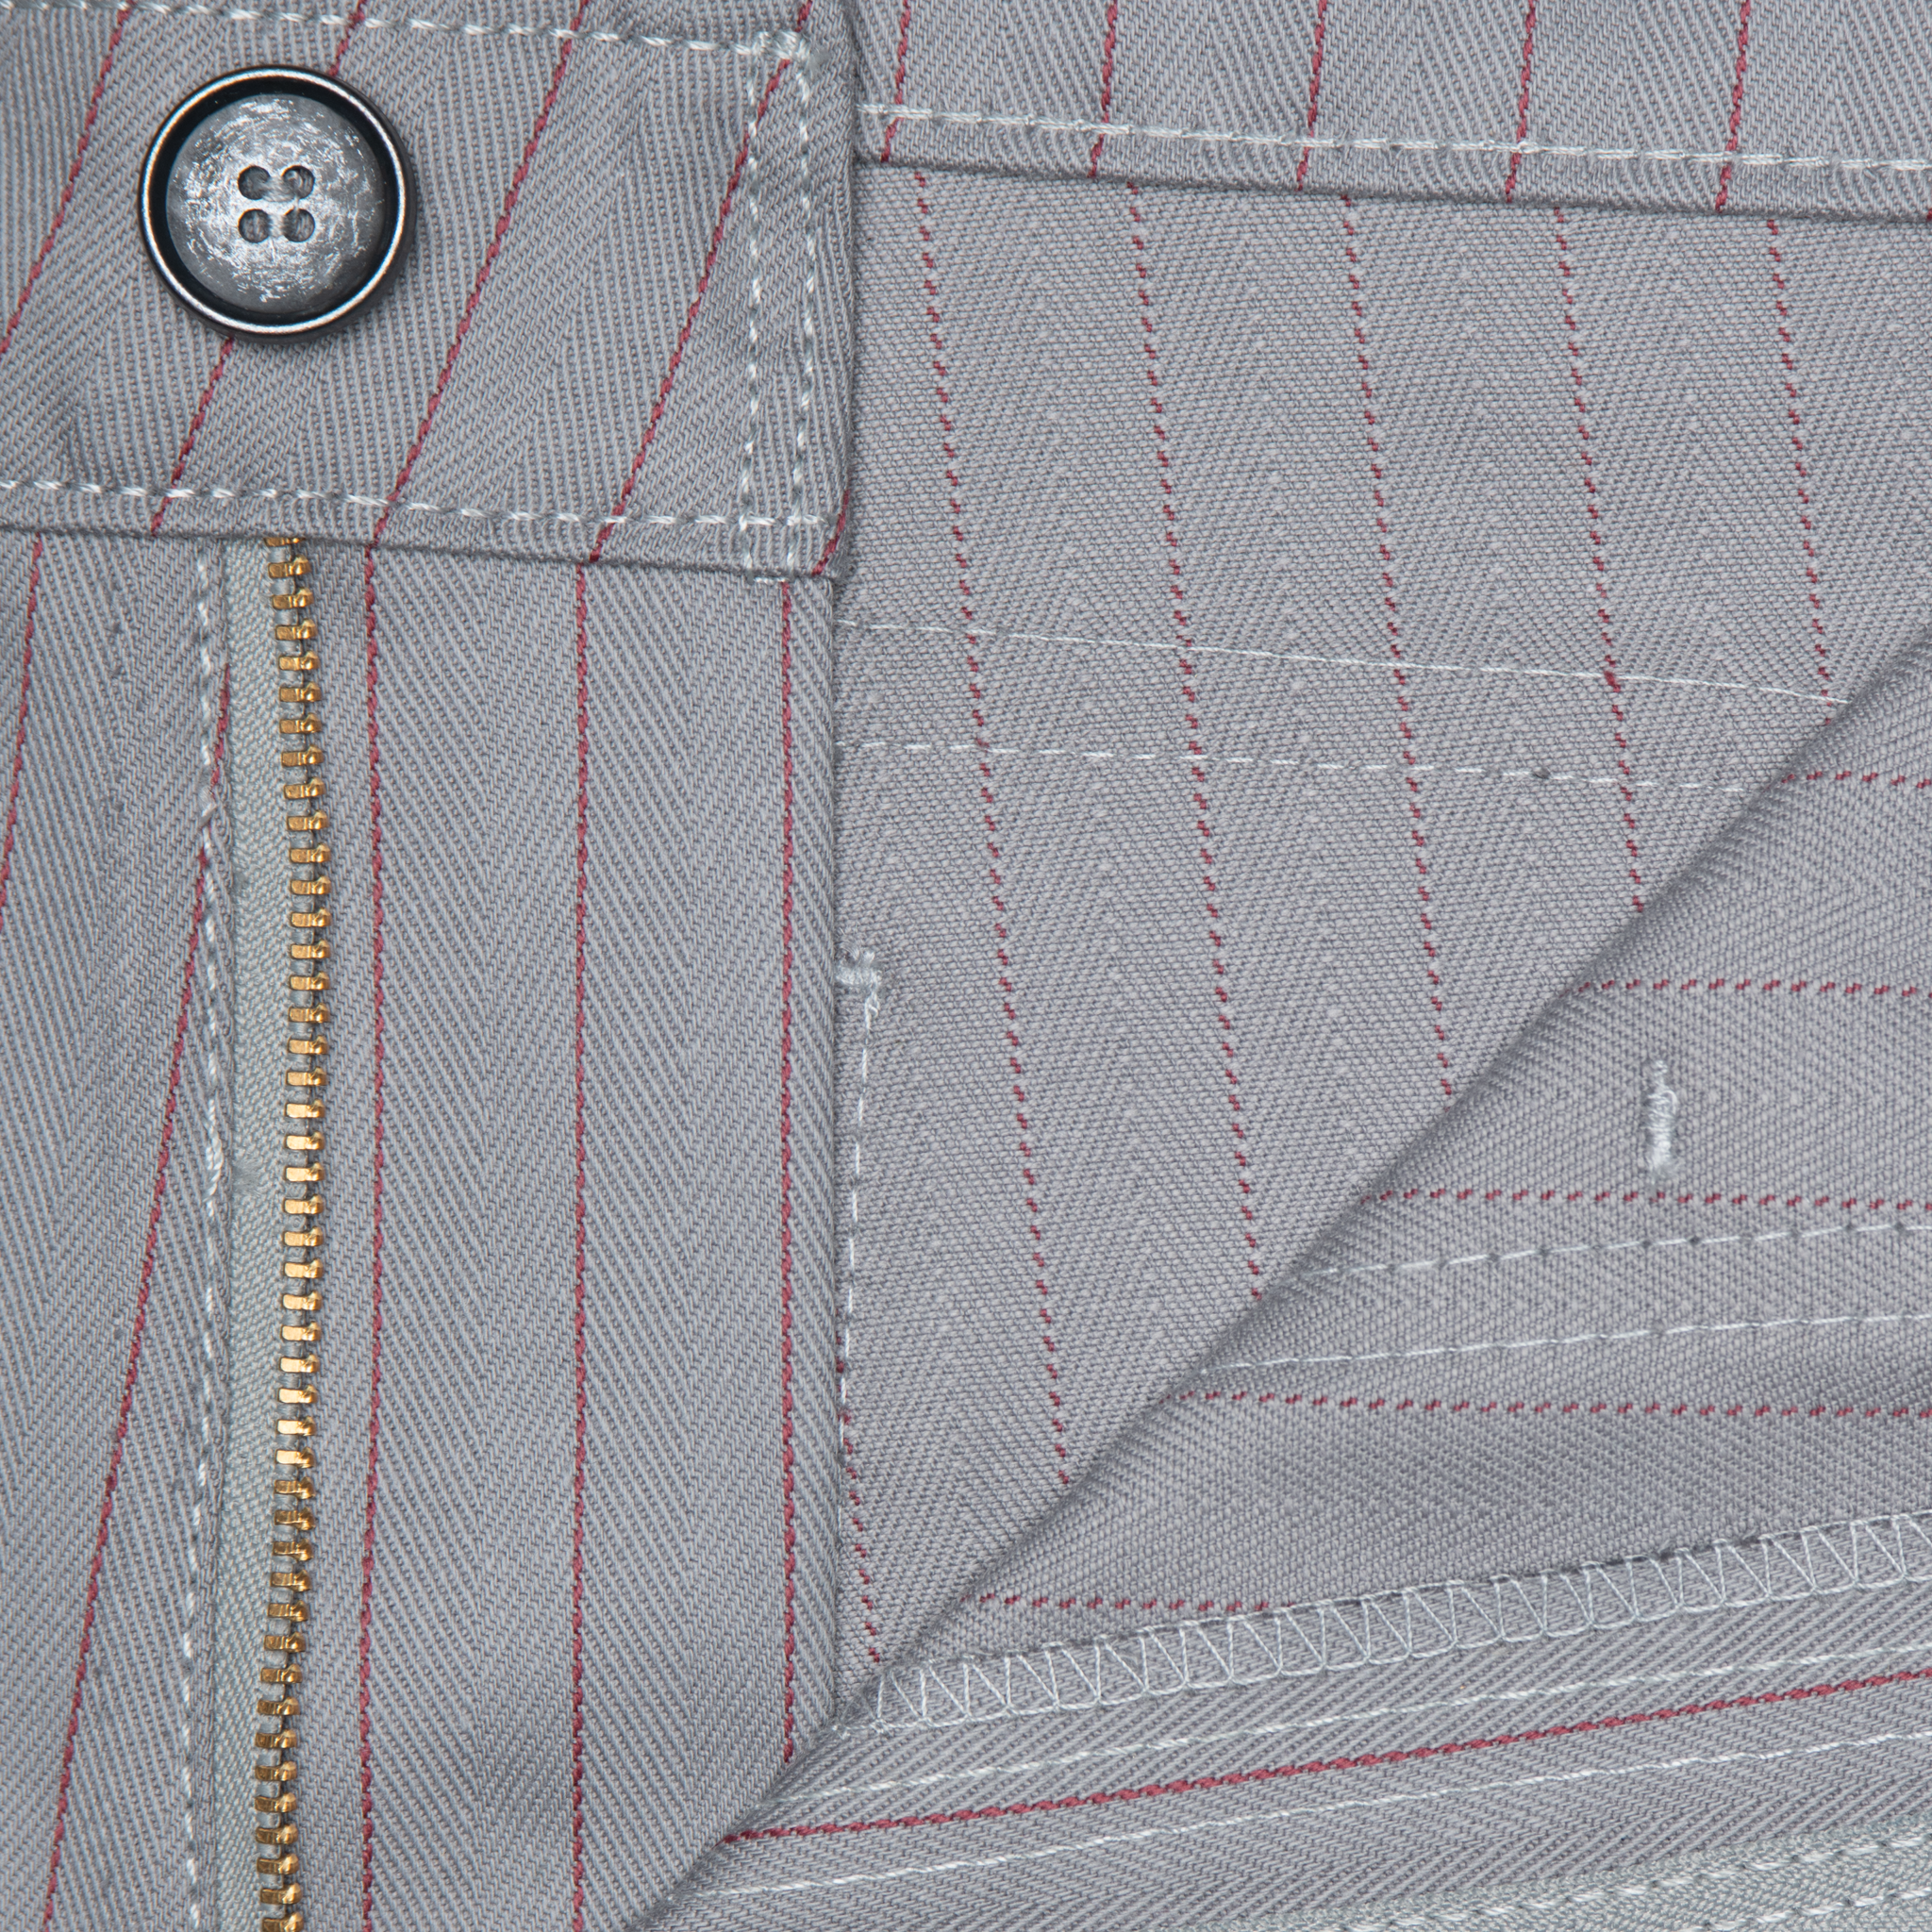  Work Pant - Repro Workwear Twill Grey - zip fly 